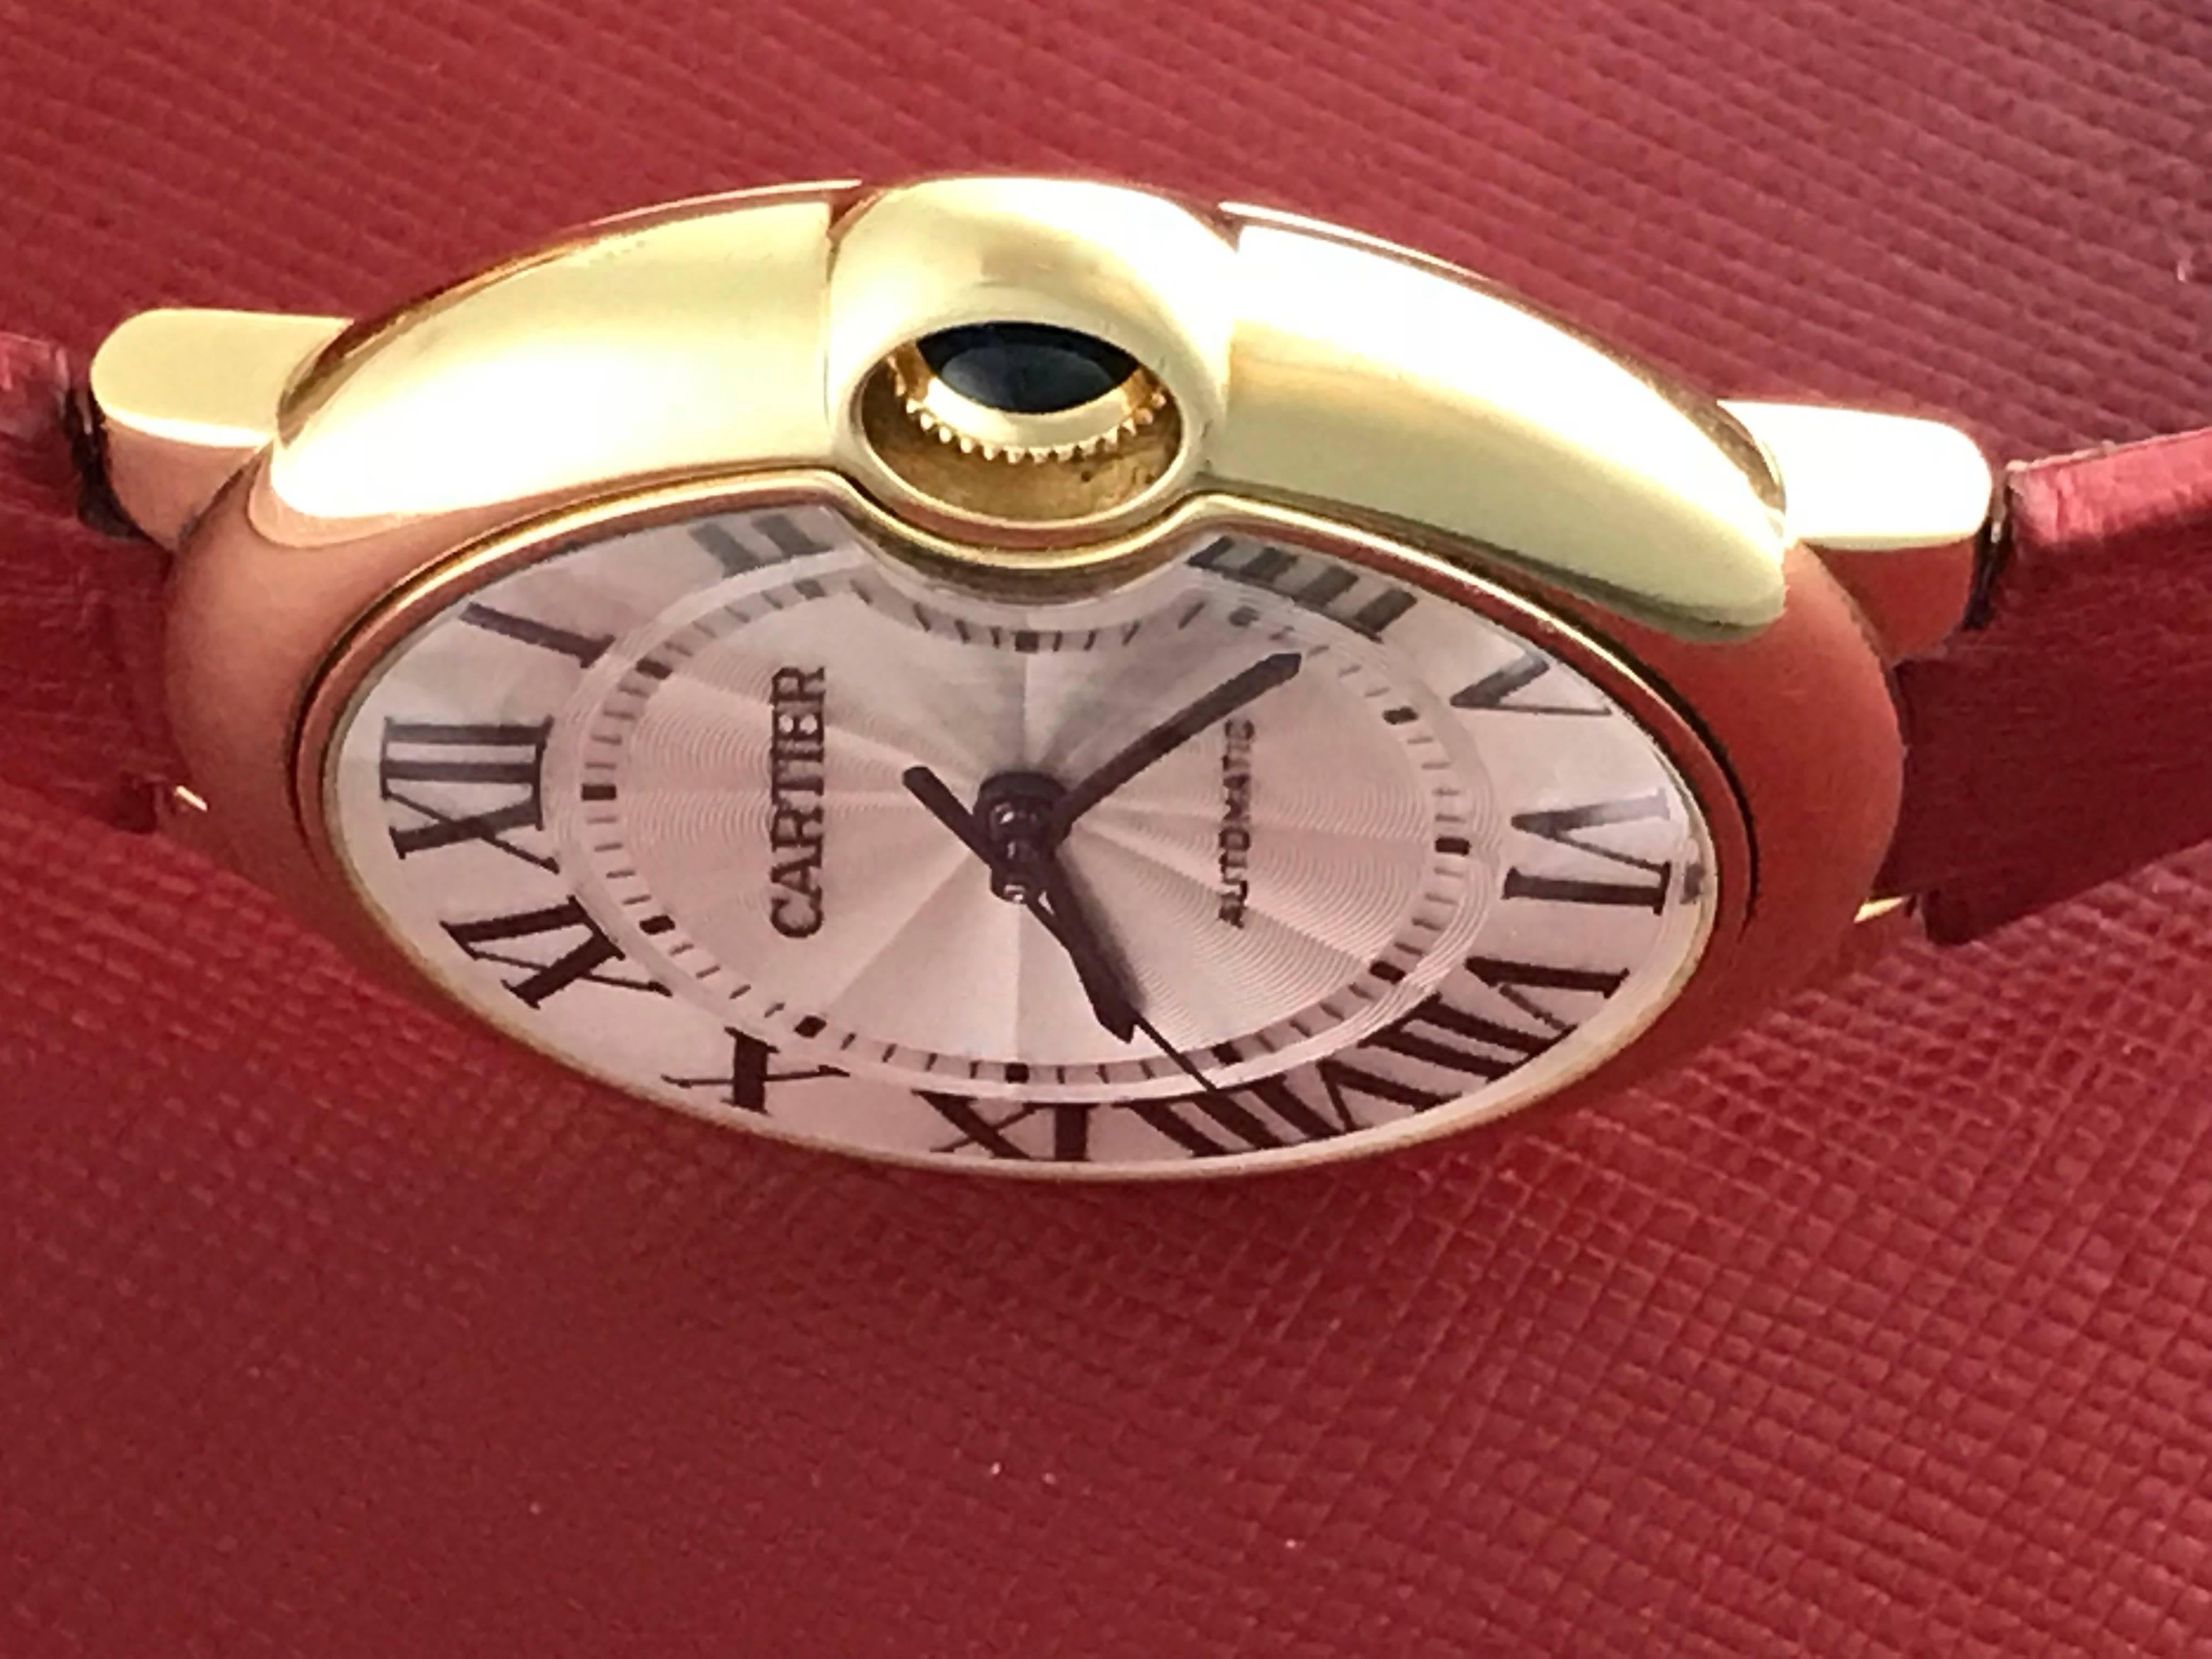 Cartier 18k Yellow Gold Ballon Bleu Automatic Wrist Watch Ref W6900551 In New Condition In Dallas, TX